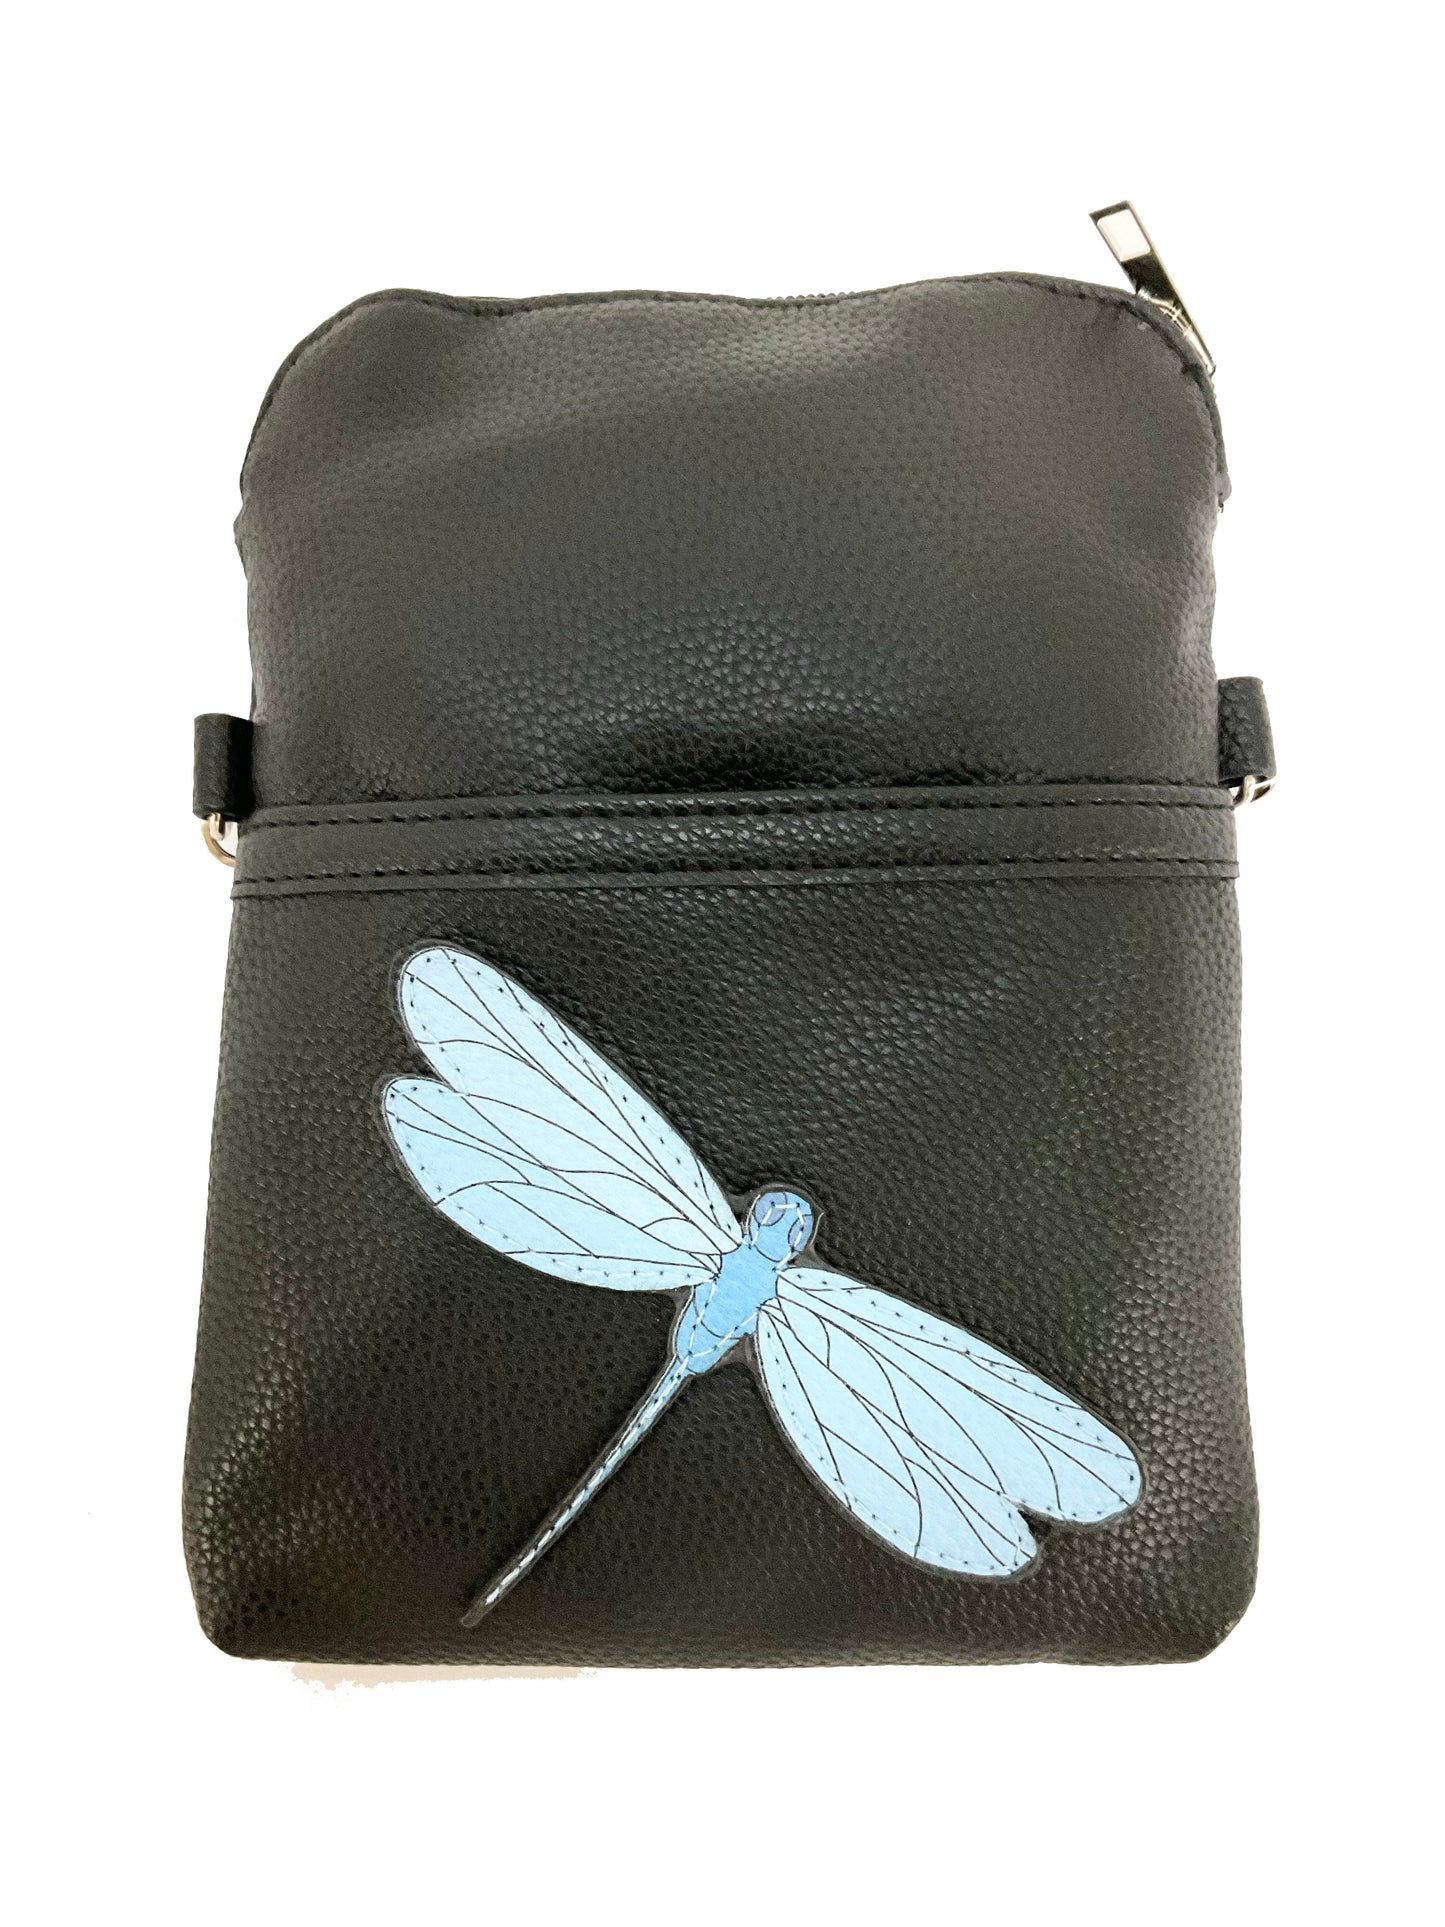 Dragonfly Bag #42-68458DRG